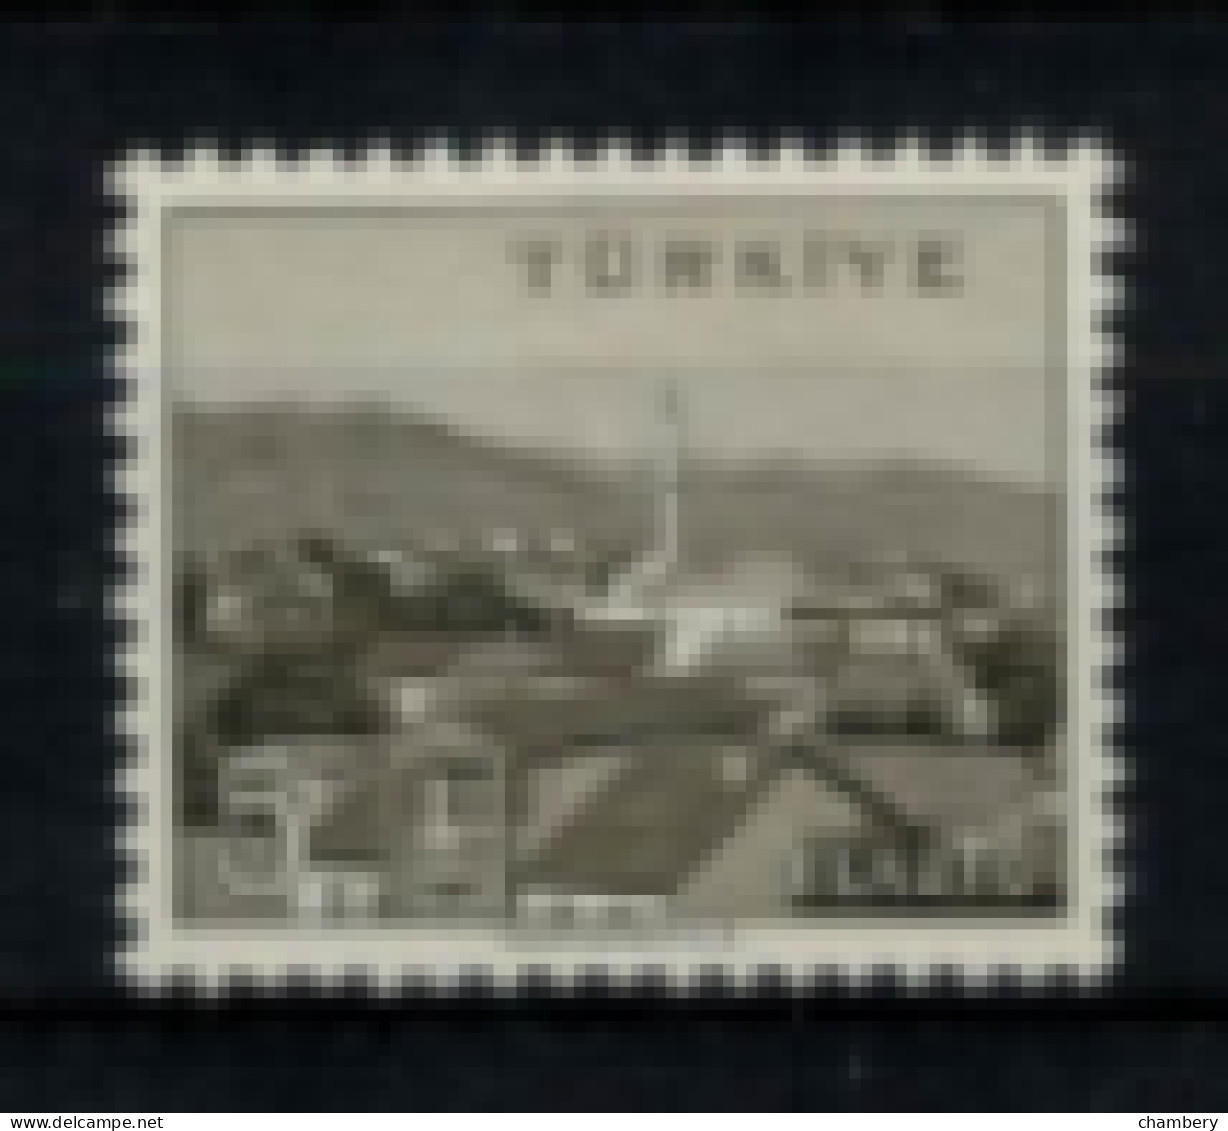 Turquie - "Chef-lieu De Département : Eldzig" - Neuf 2** N° 1449 De 1959 - Neufs